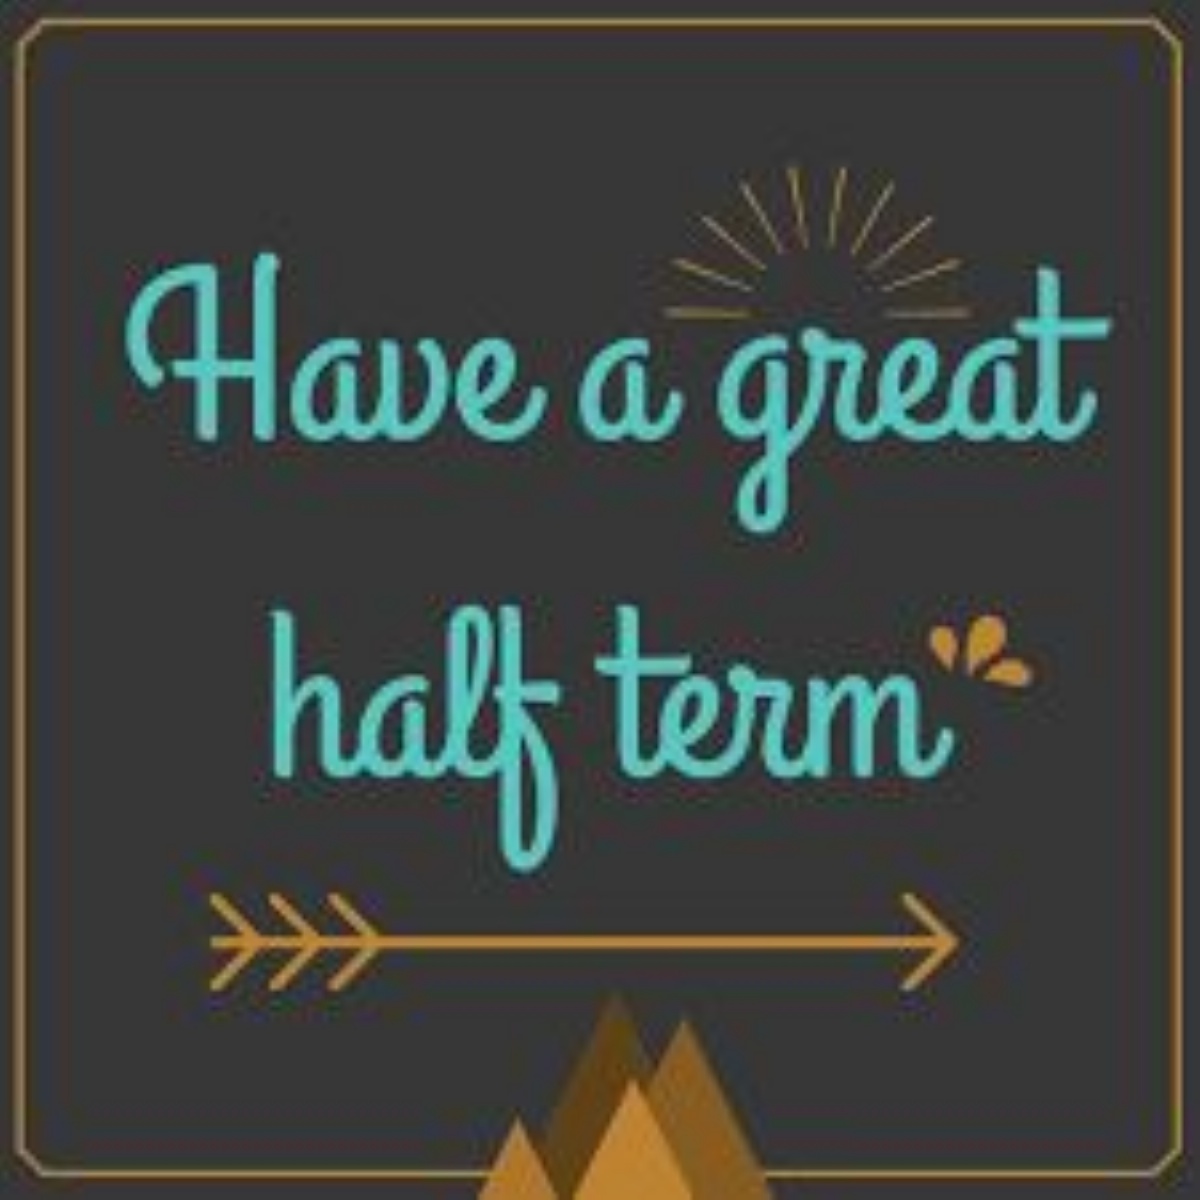 Chilton Primary School - Happy Half Term!